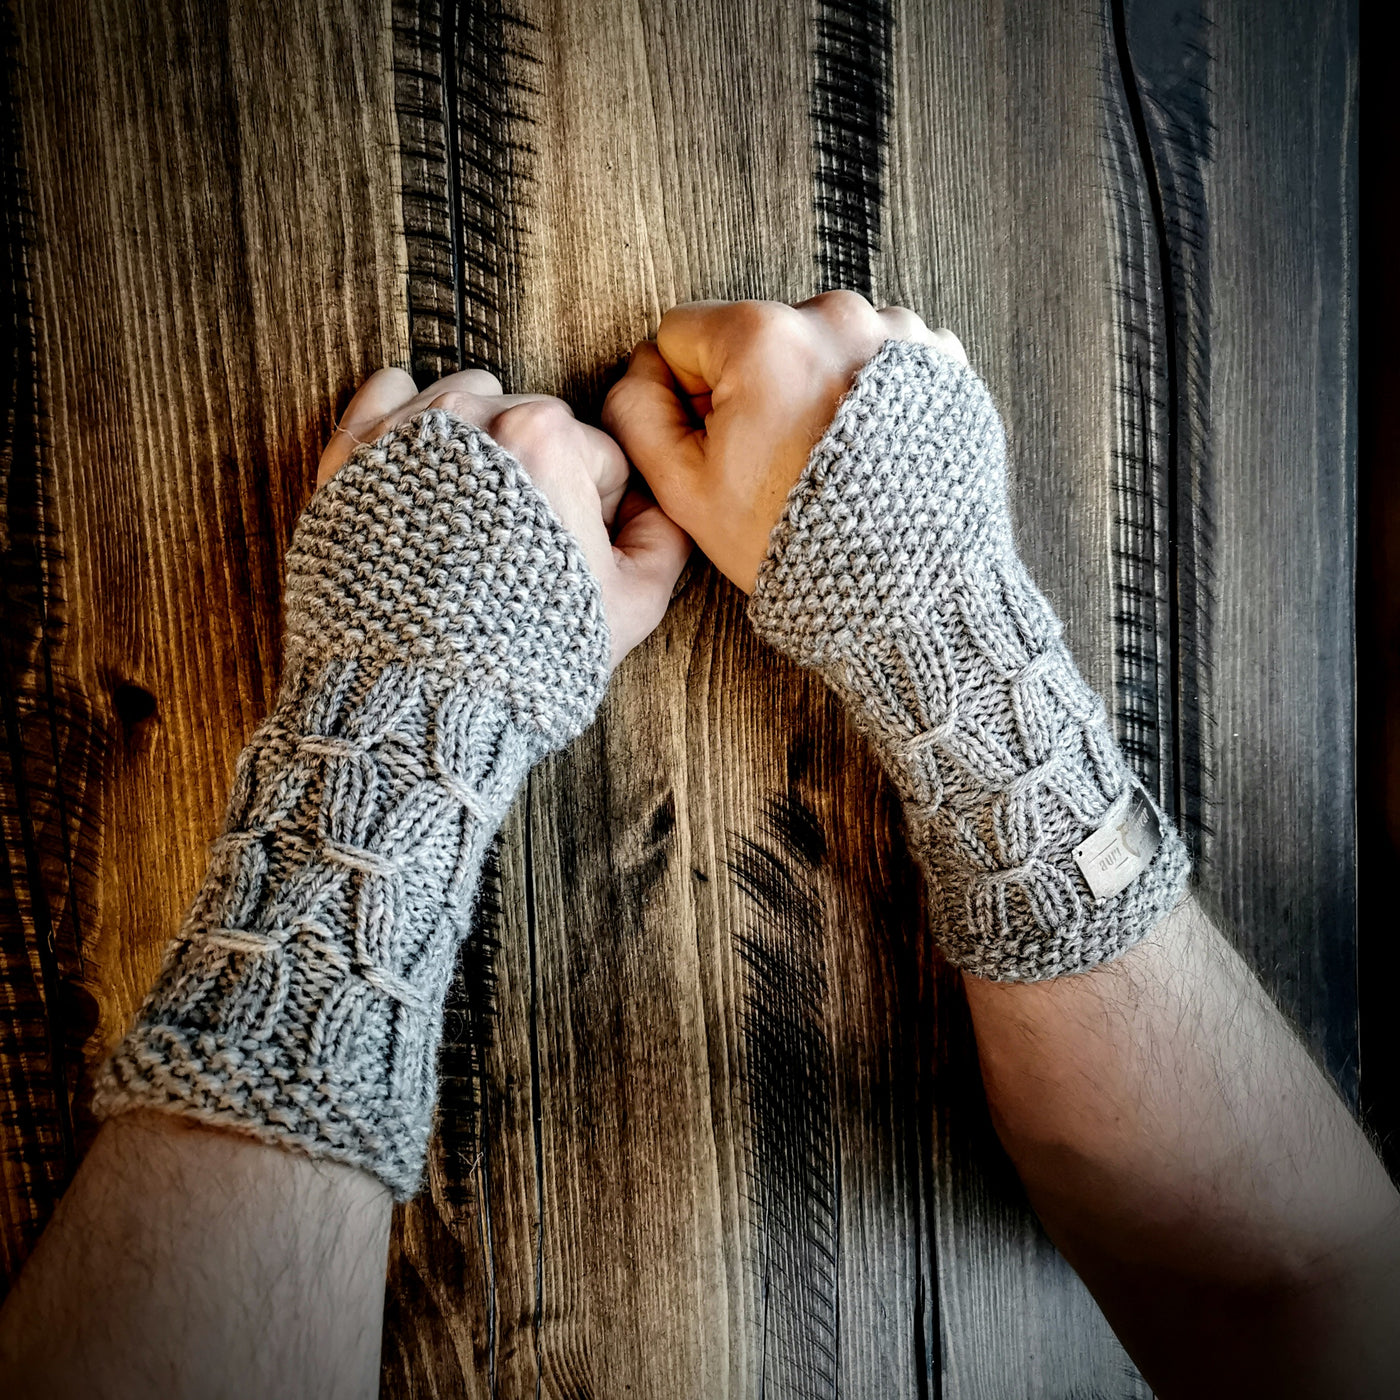 Handmade knitted cloudy grey wrist warmers